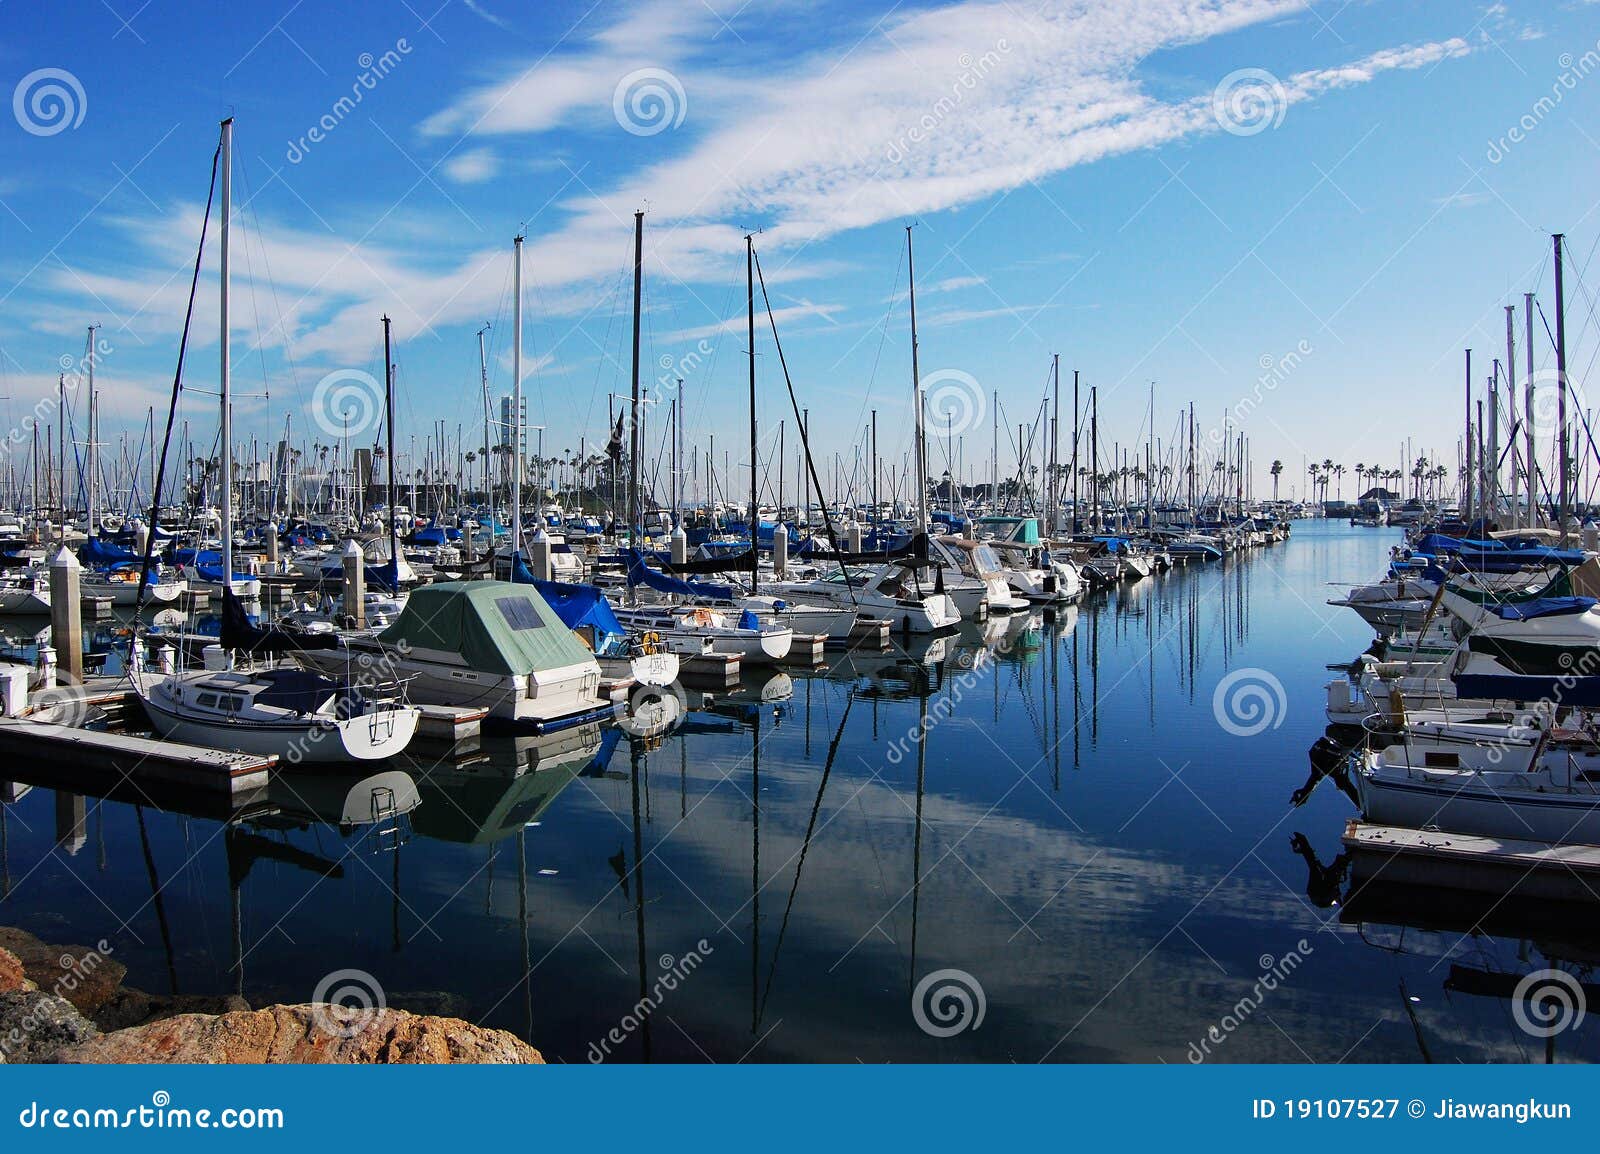 Yacht Harbor in Long Beach, California Stock Image - Image of ...